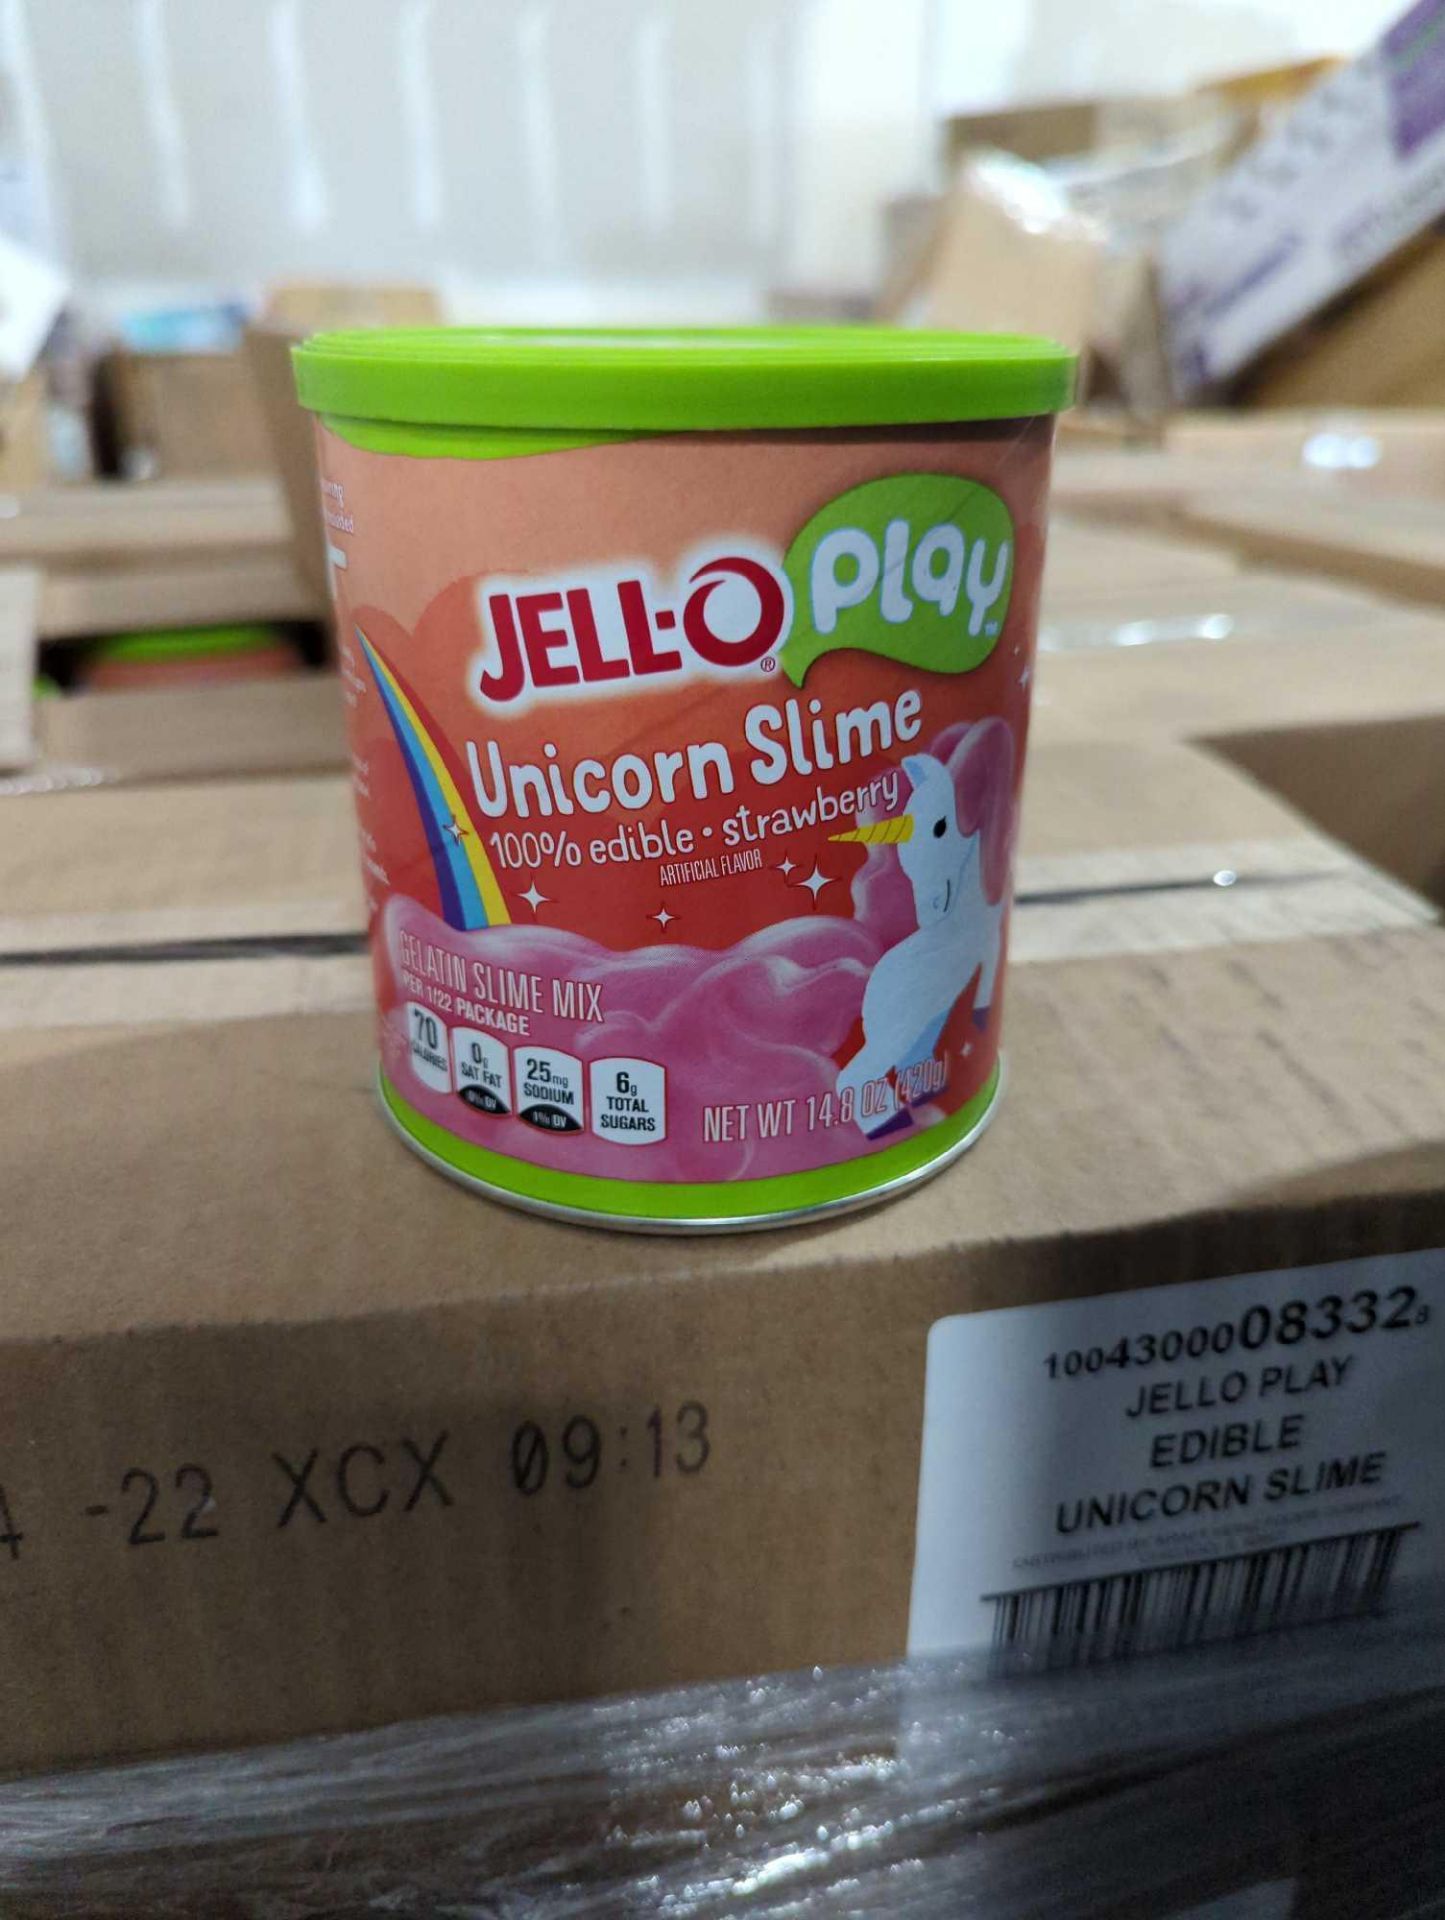 Jello play edible unicorn slime - Image 2 of 6